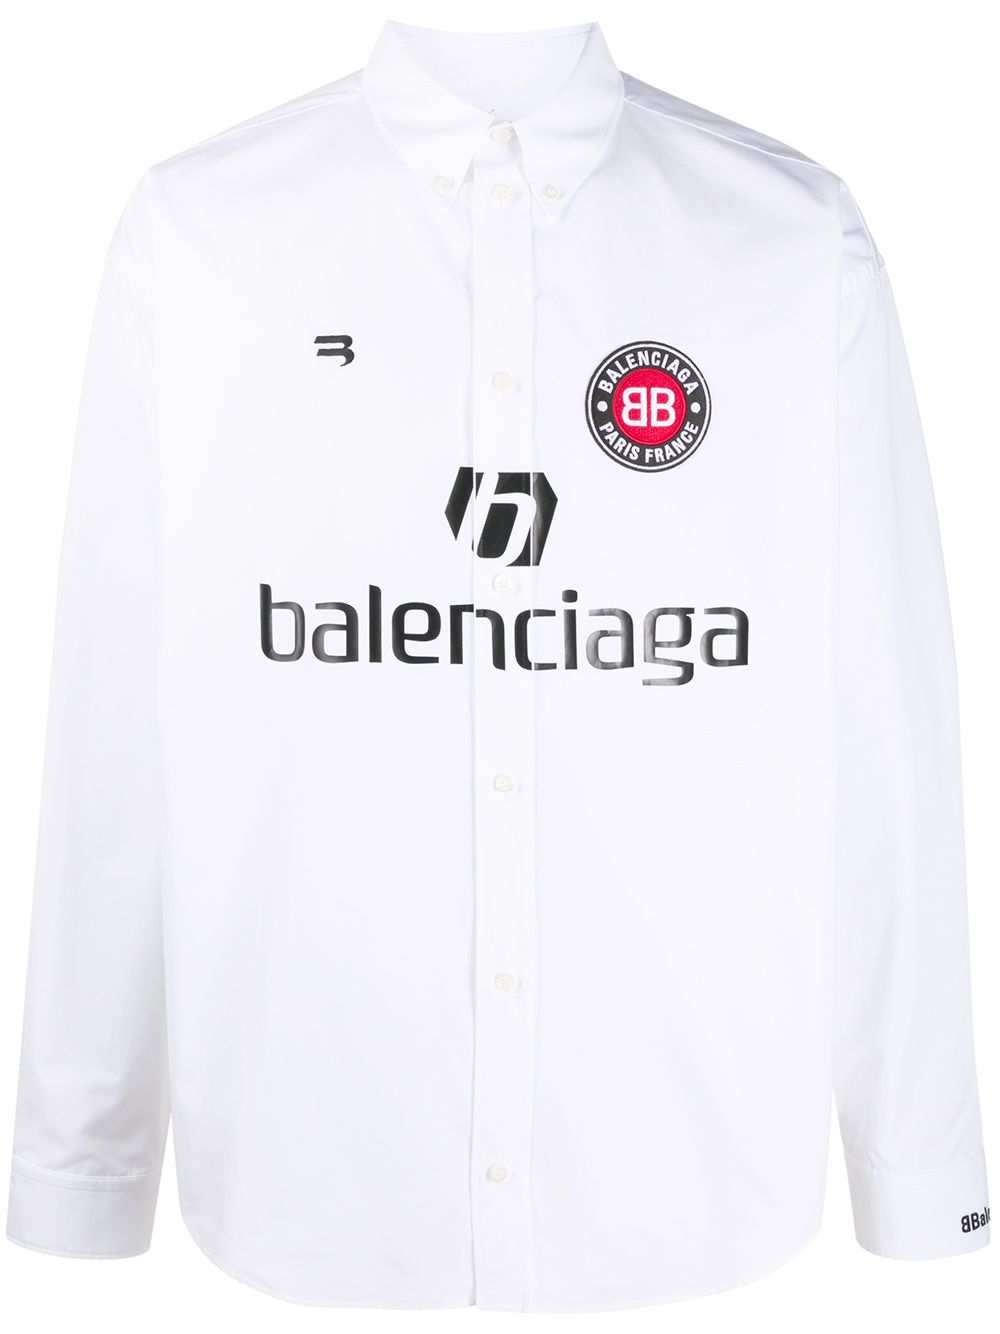 фото Balenciaga рубашка с принтом soccer